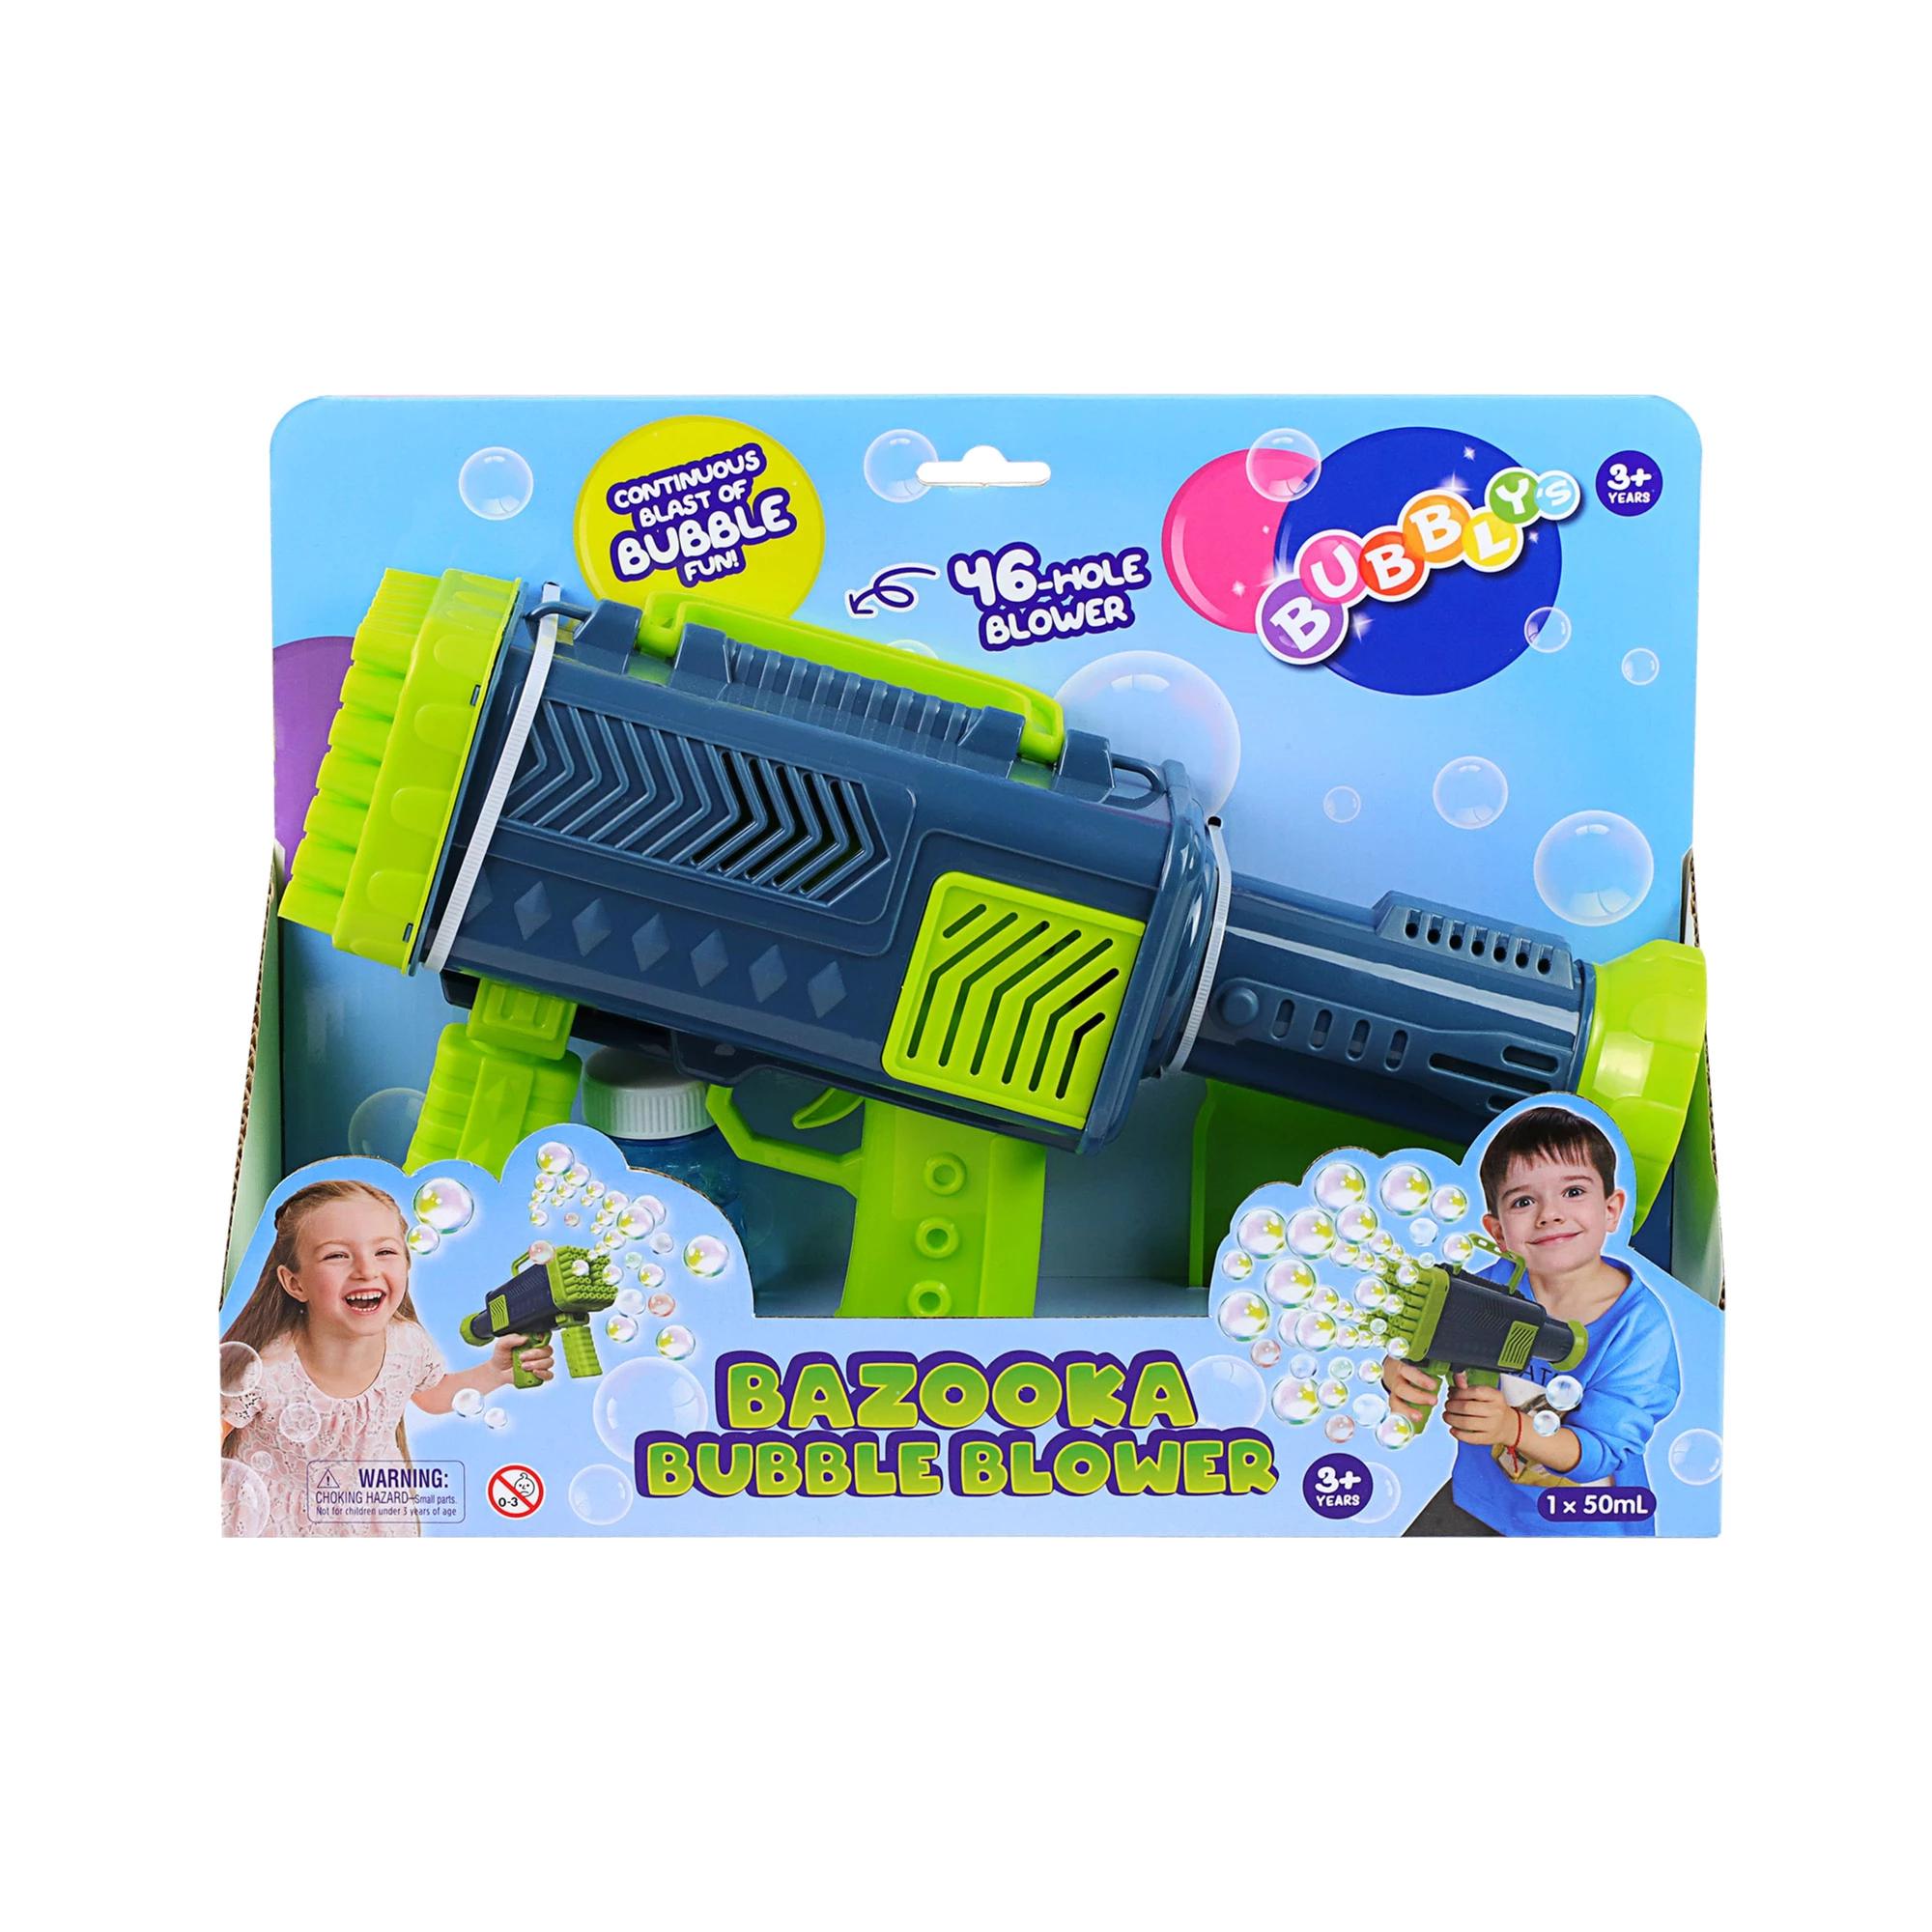  Bazooka Bubble Gun for Kids - Automatic Continuous